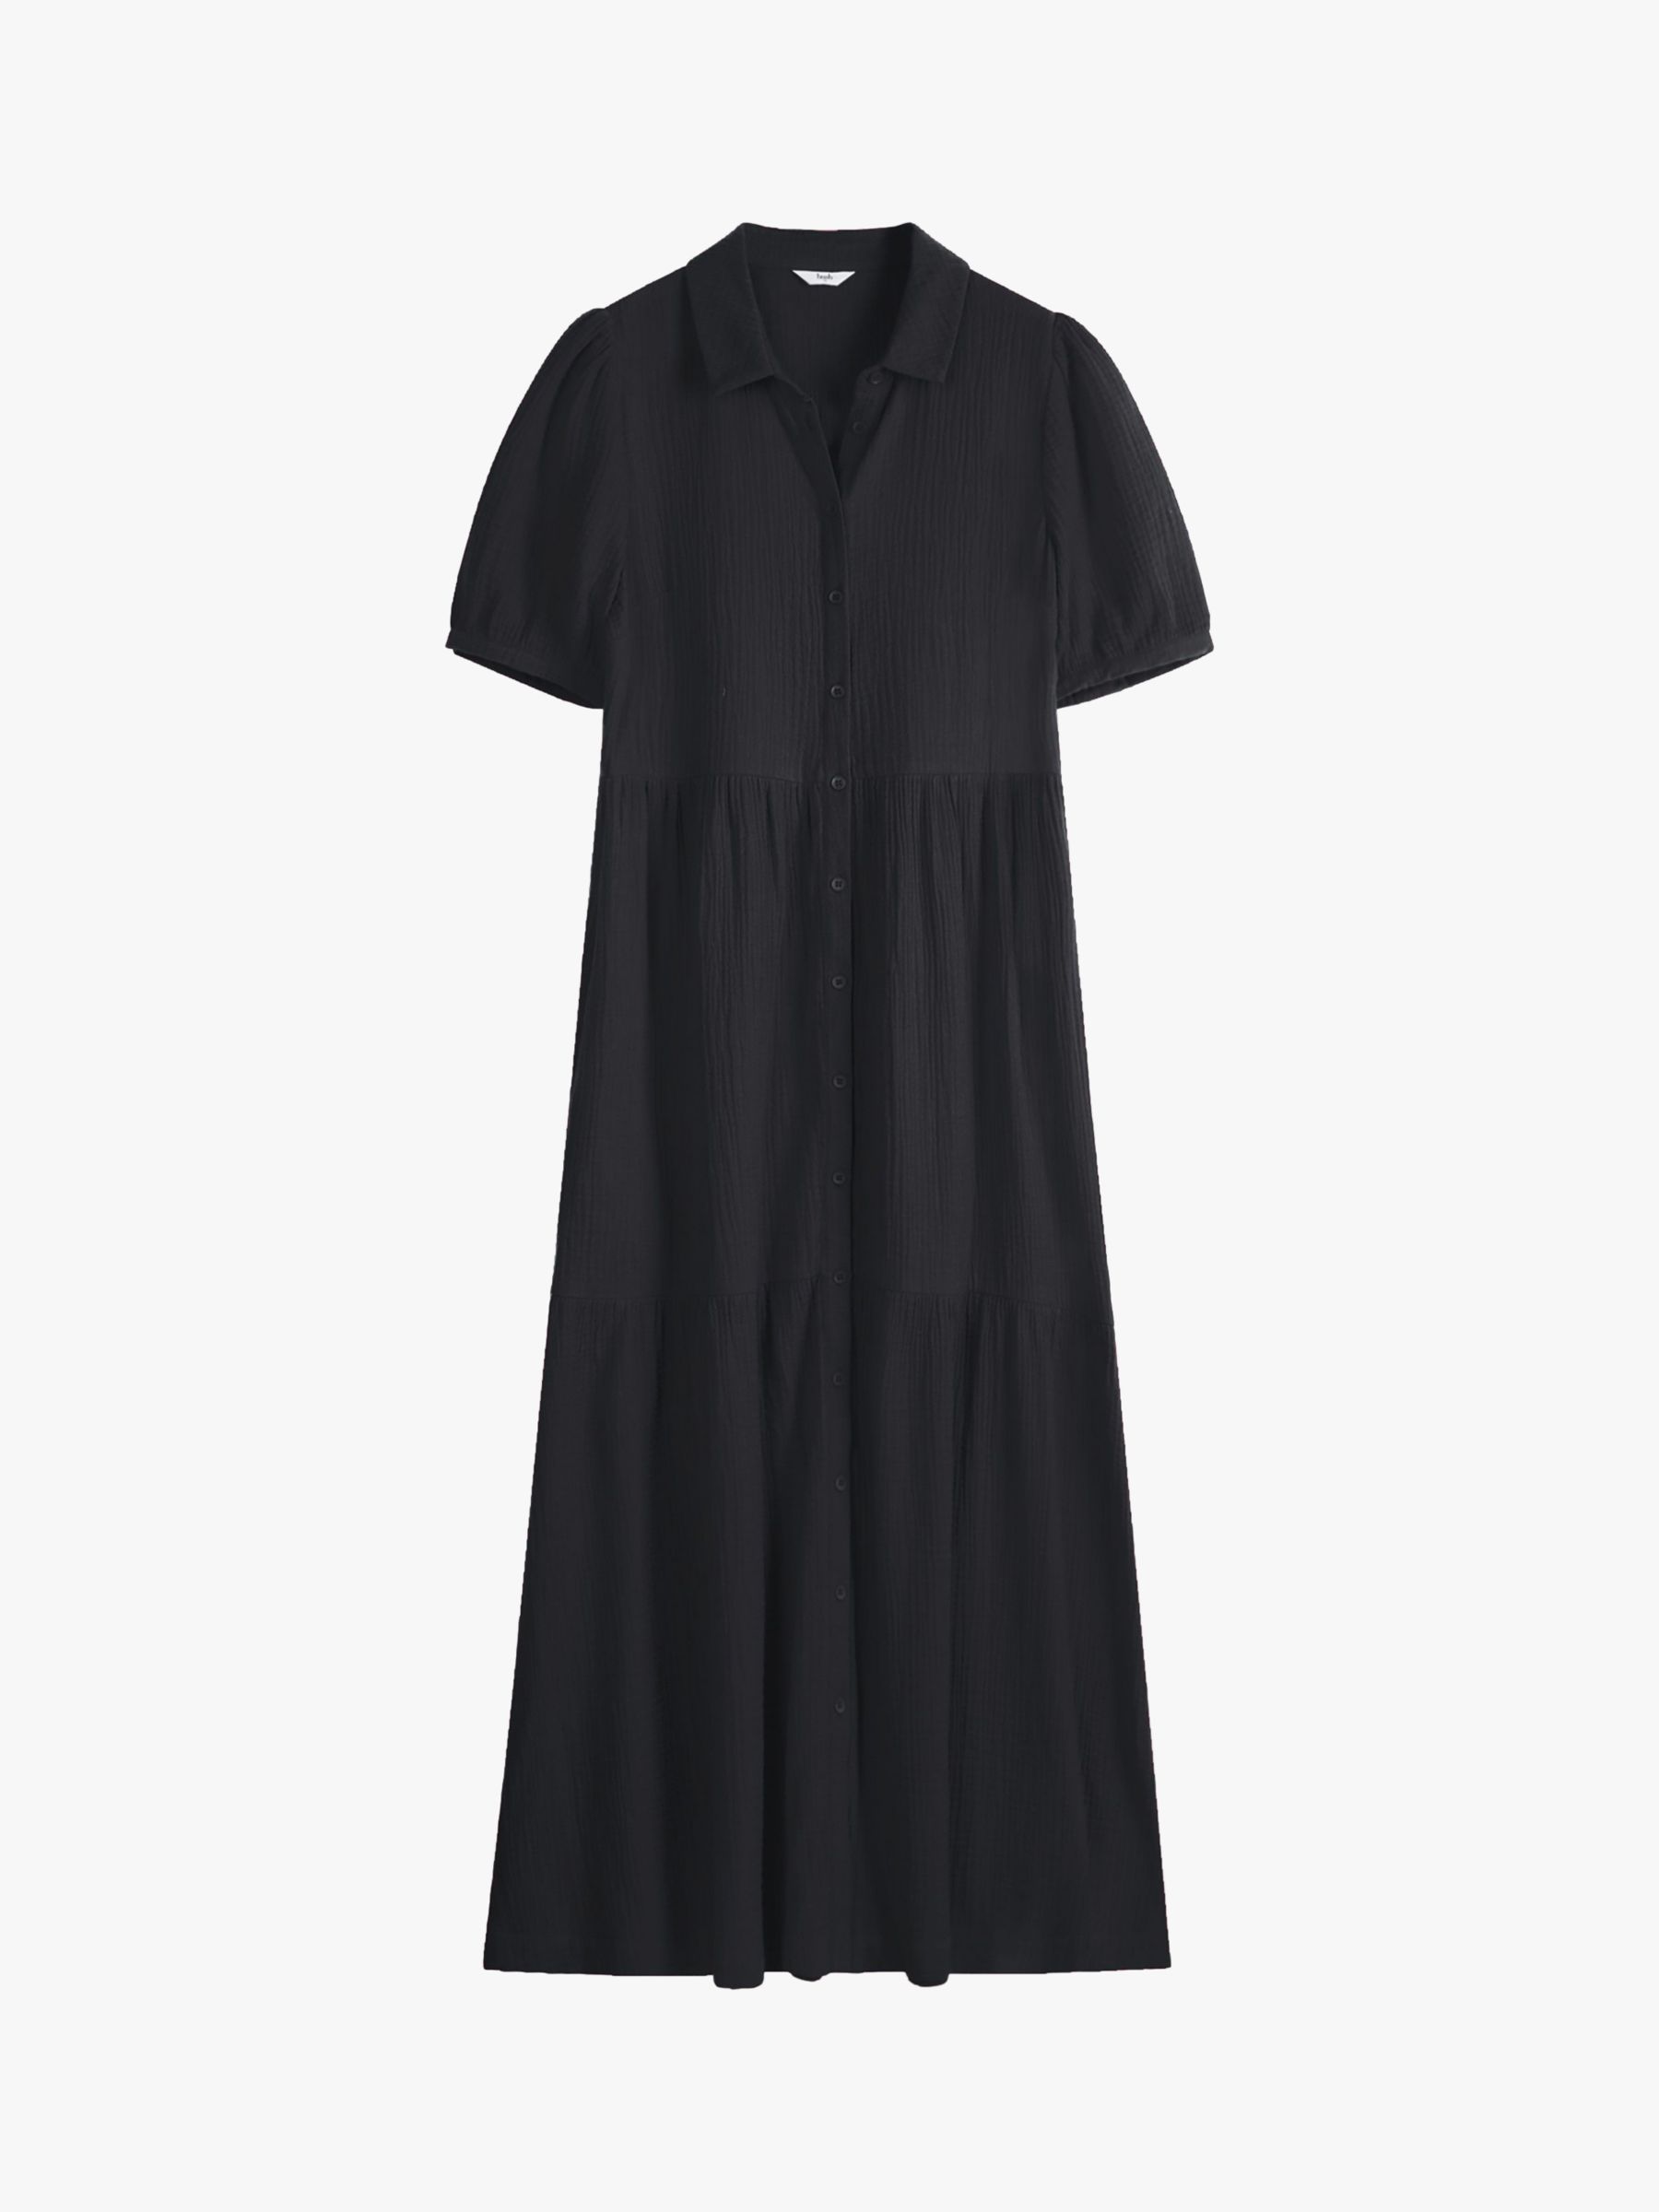 hush Clancy Textured Midi Shirt Dress, Black, 4